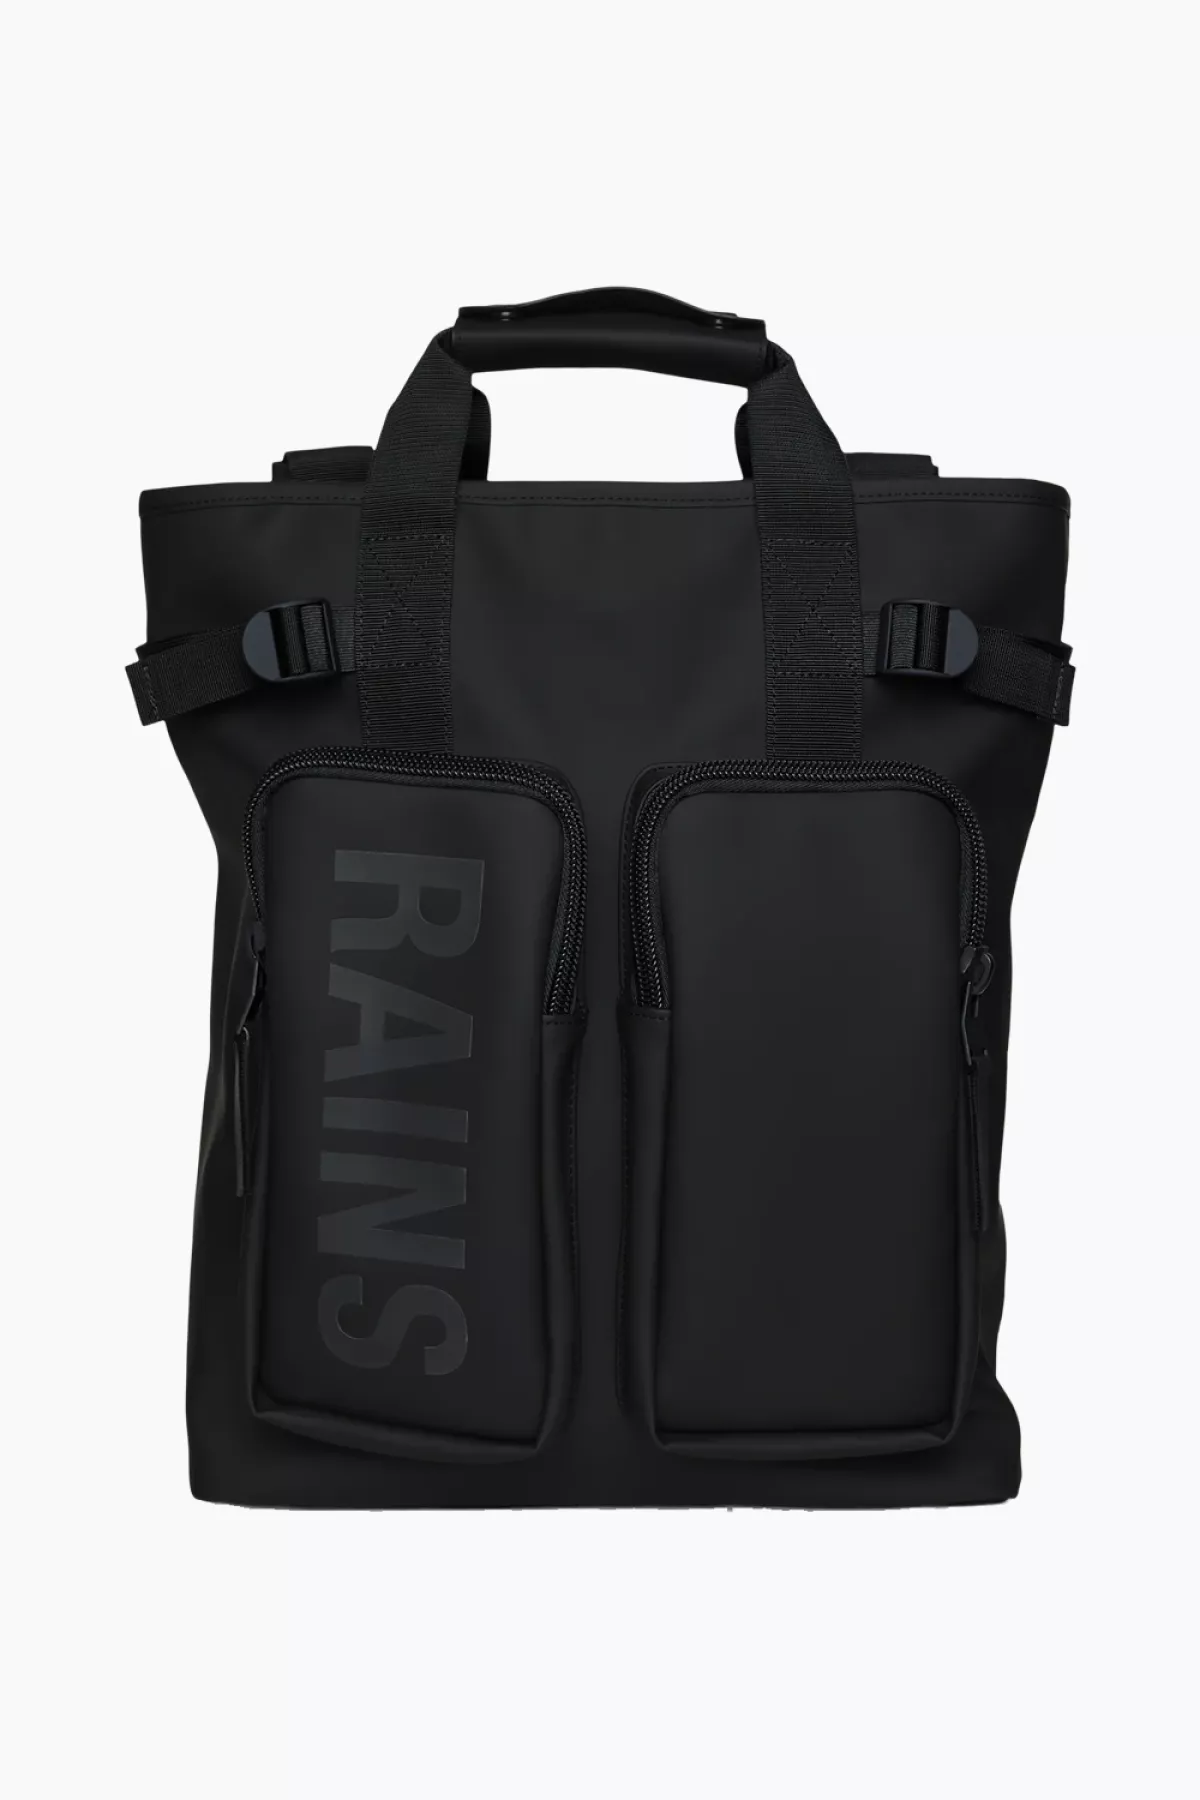 #2 - Texel Tote Backpack - Black - Rains - Sort One Size